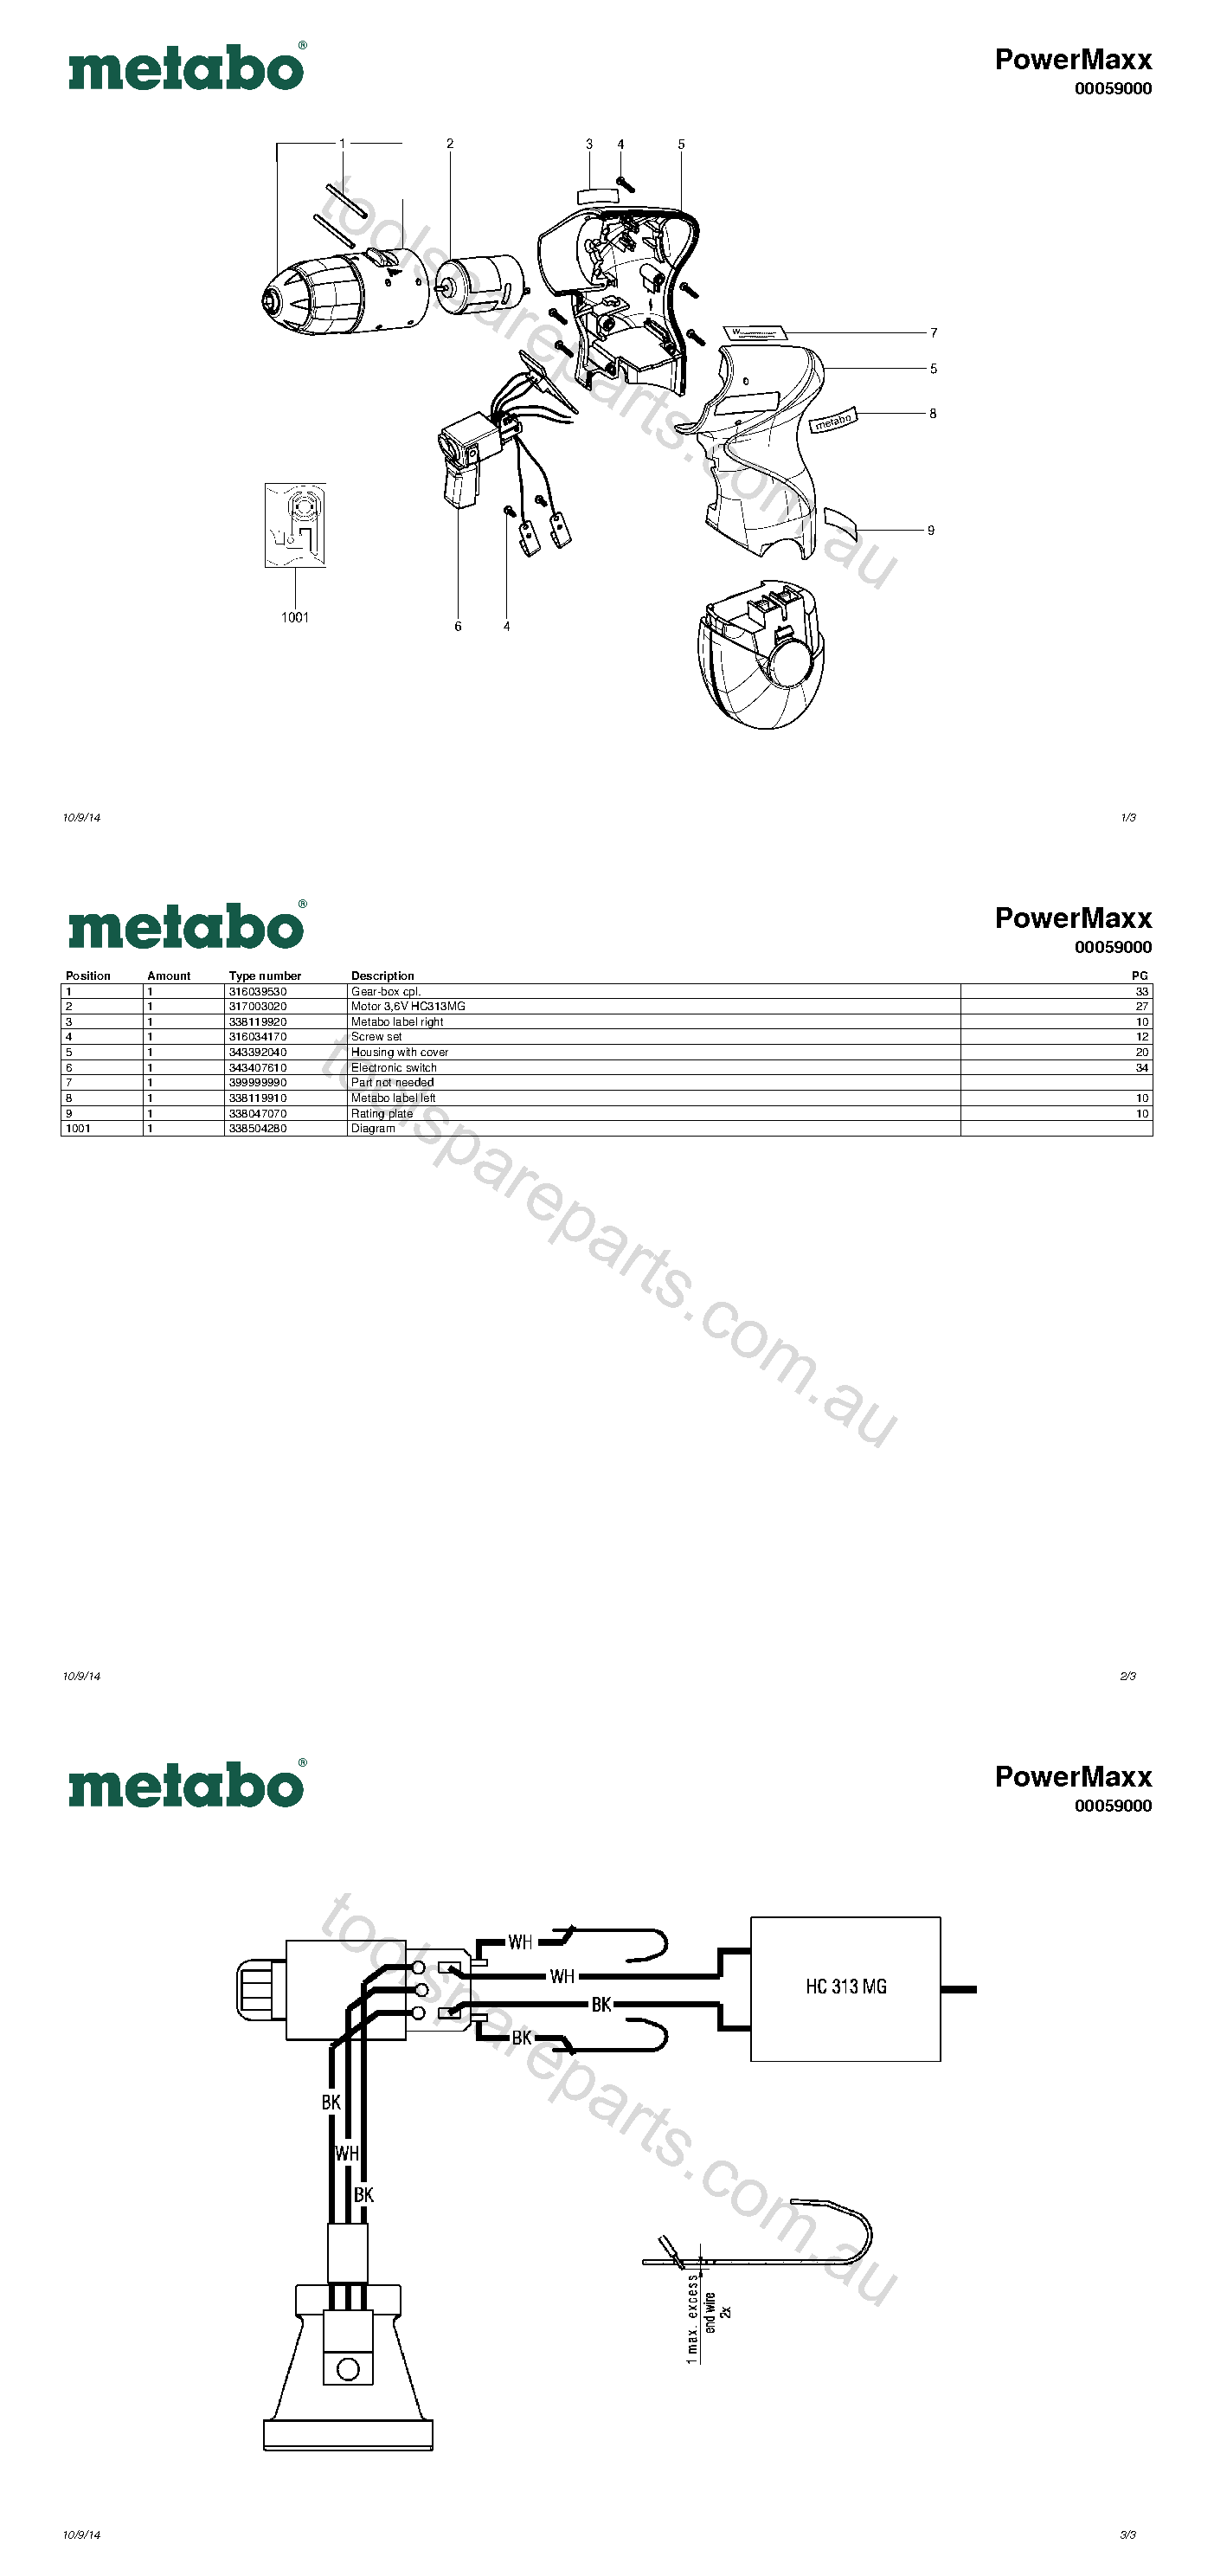 Metabo PowerMaxx 00059000  Diagram 1